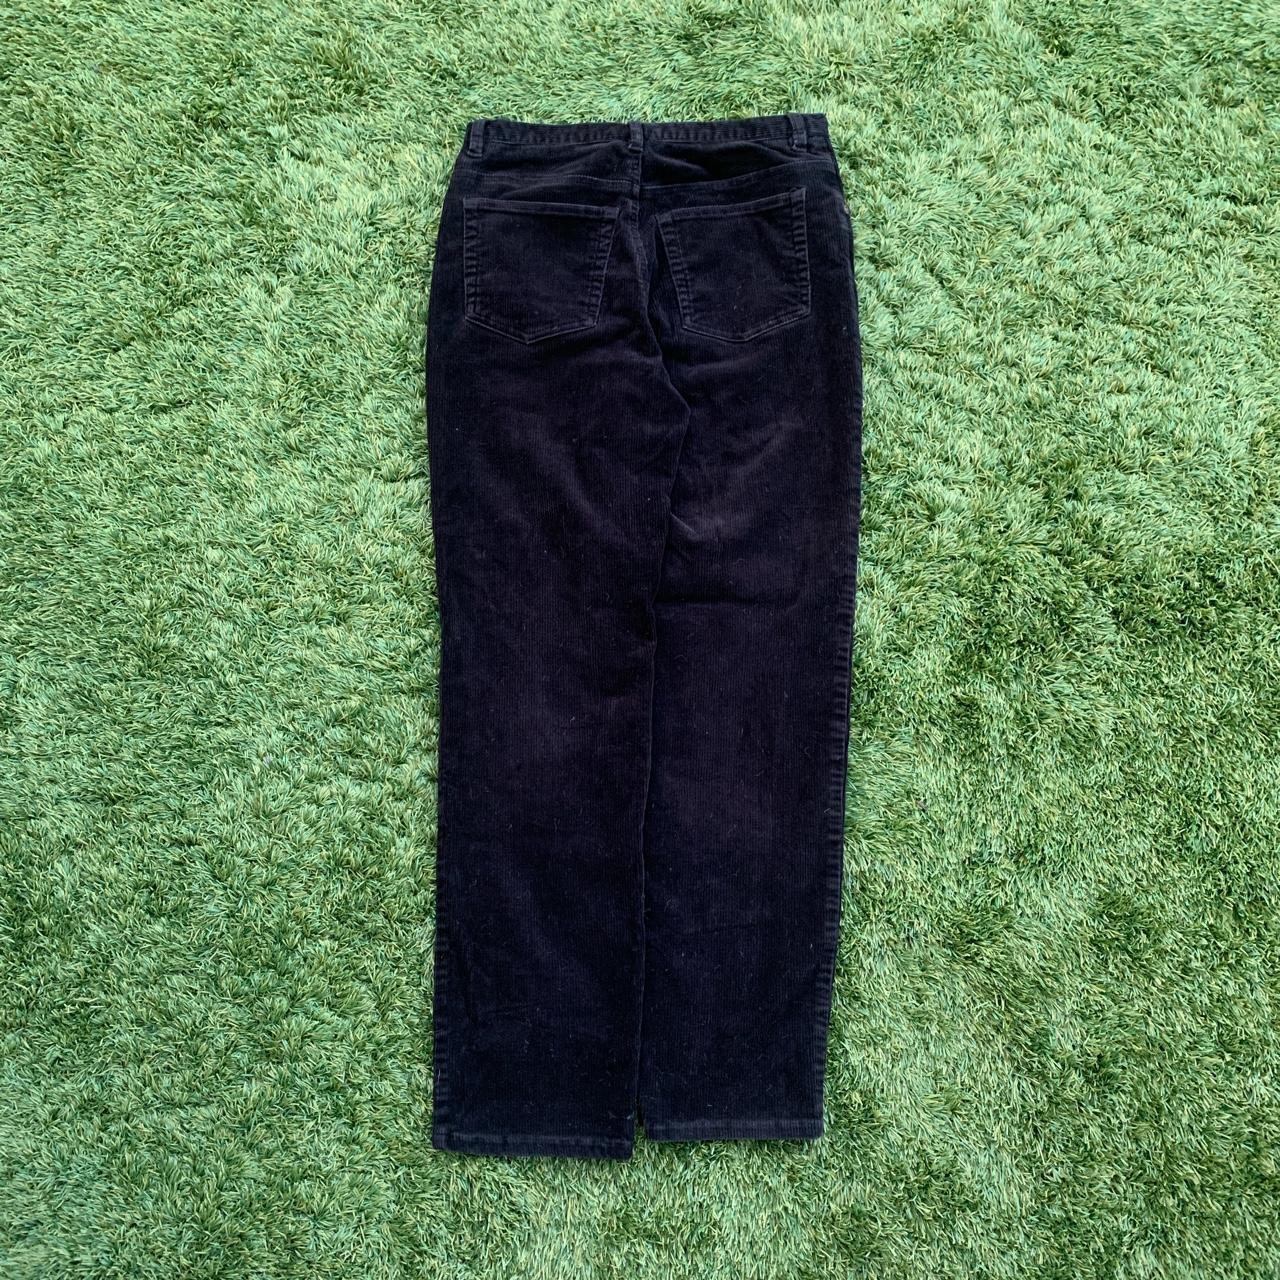 Jones New York Black corduroy pants Tag size - Depop